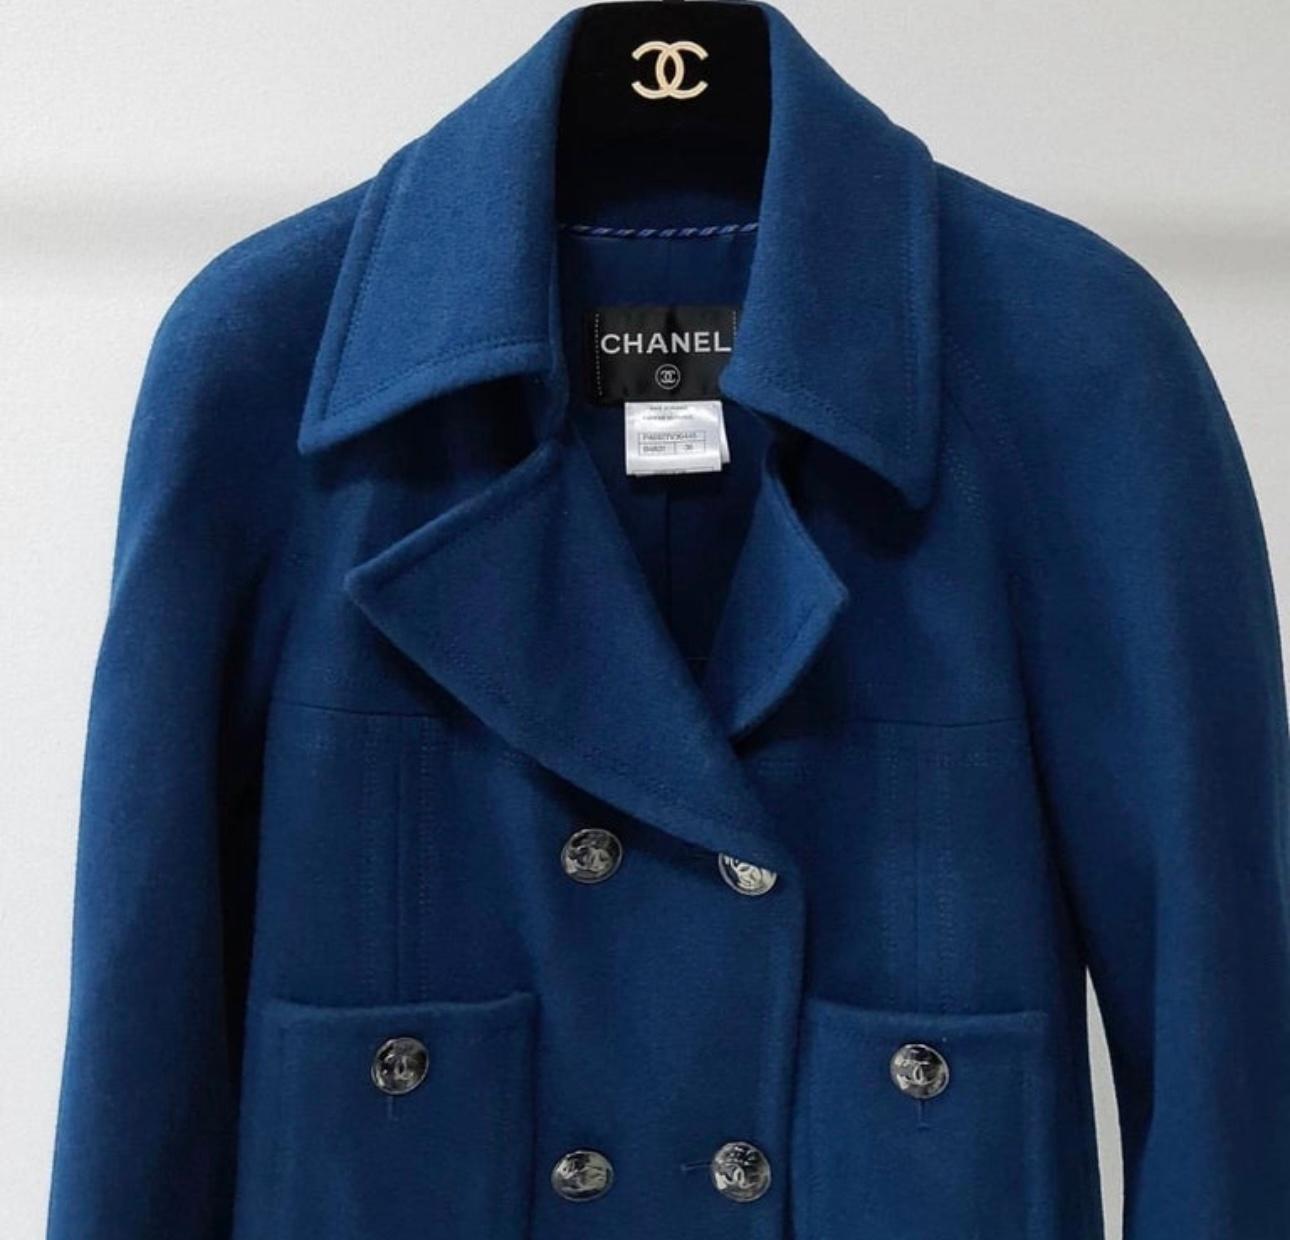 Chanel Cara Delevingne Style Runway Jacket 3